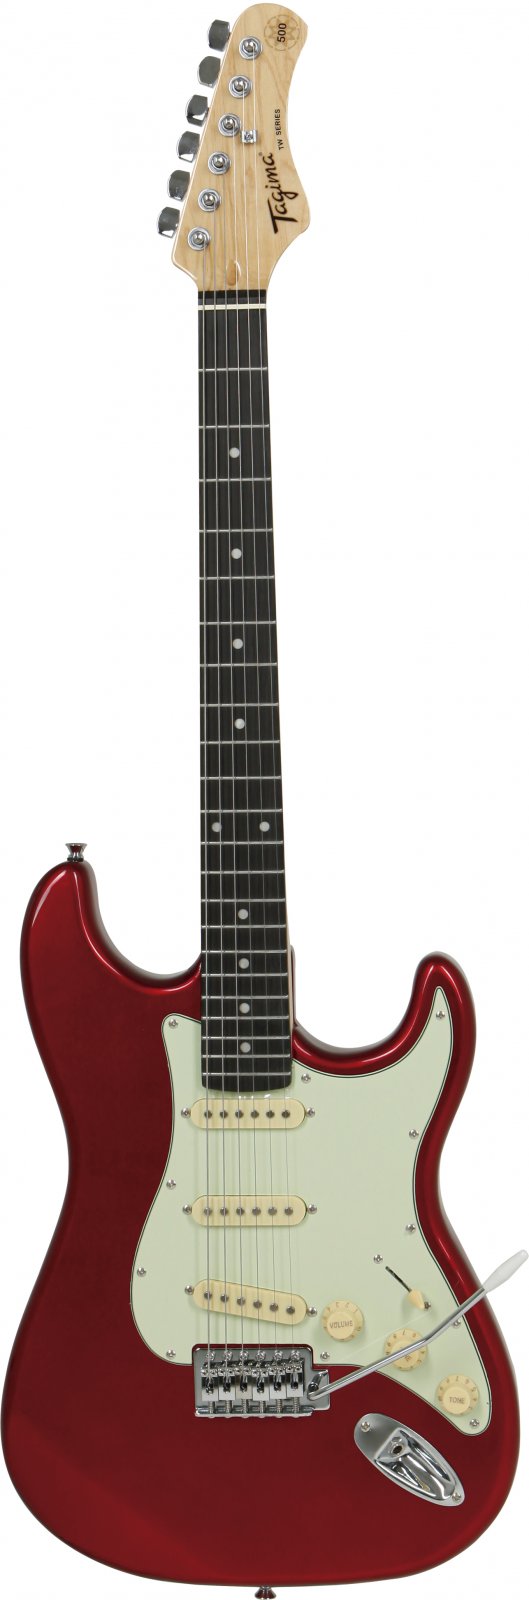 Tagima TG 500-CA-DF/MG Electric Guitar (Candy Apple)